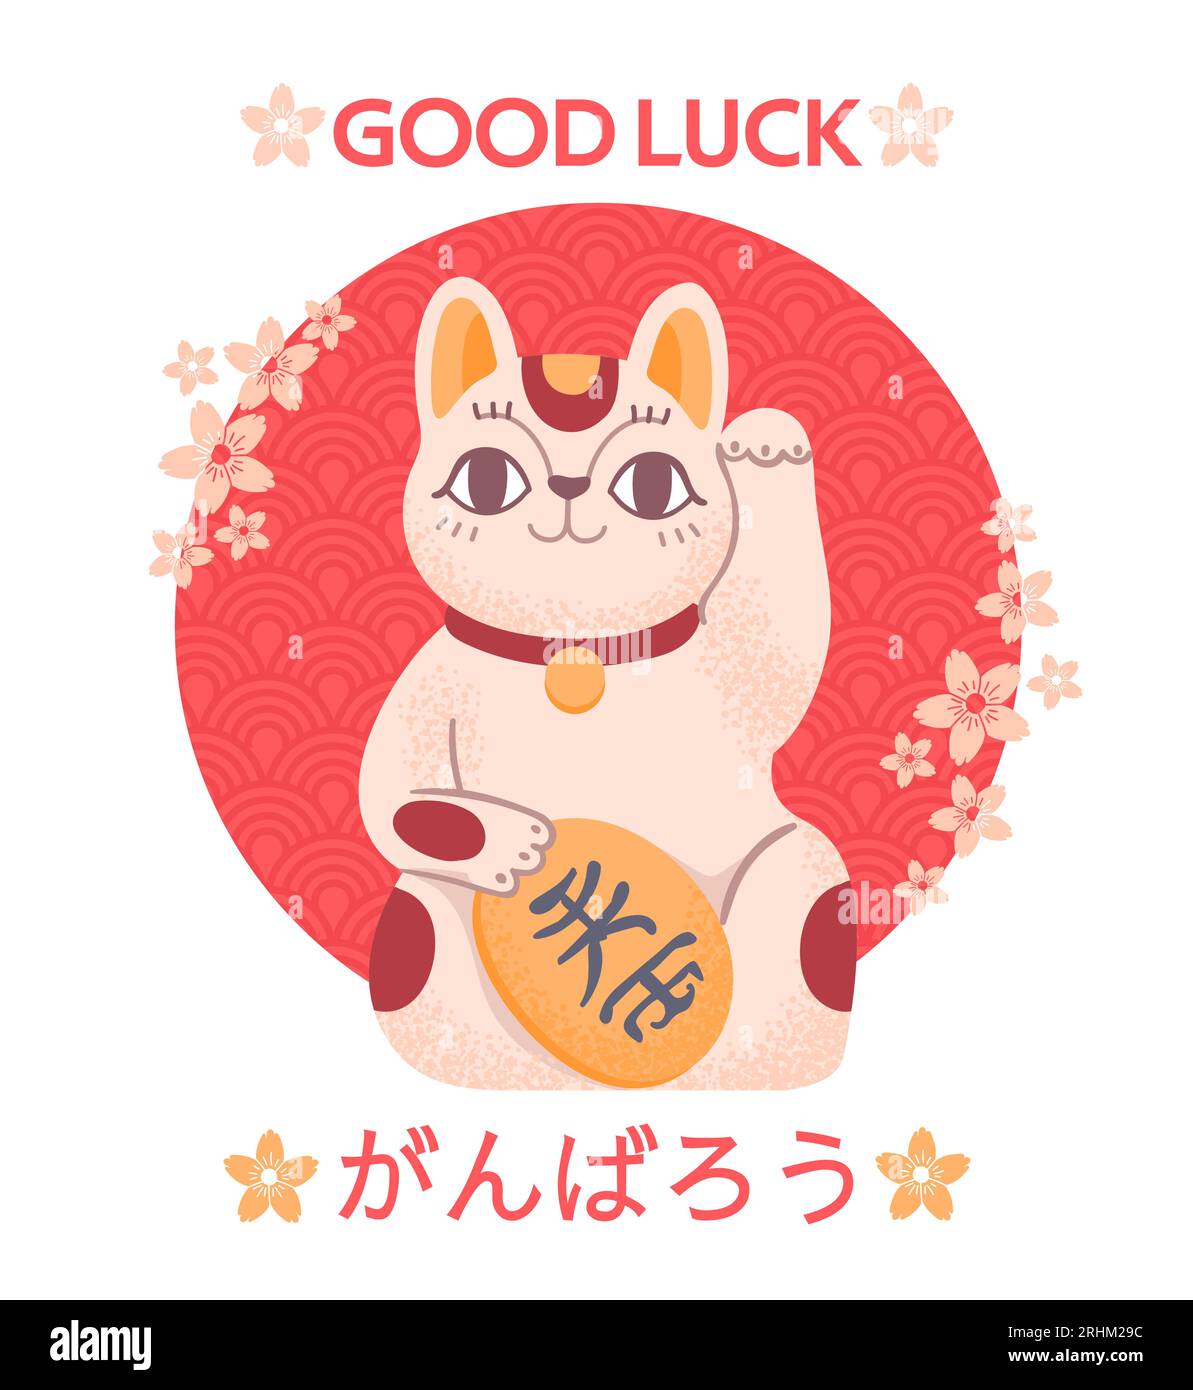 Japanese good luck poster. Cartoon kawaii maneki neko lucky cat with ...